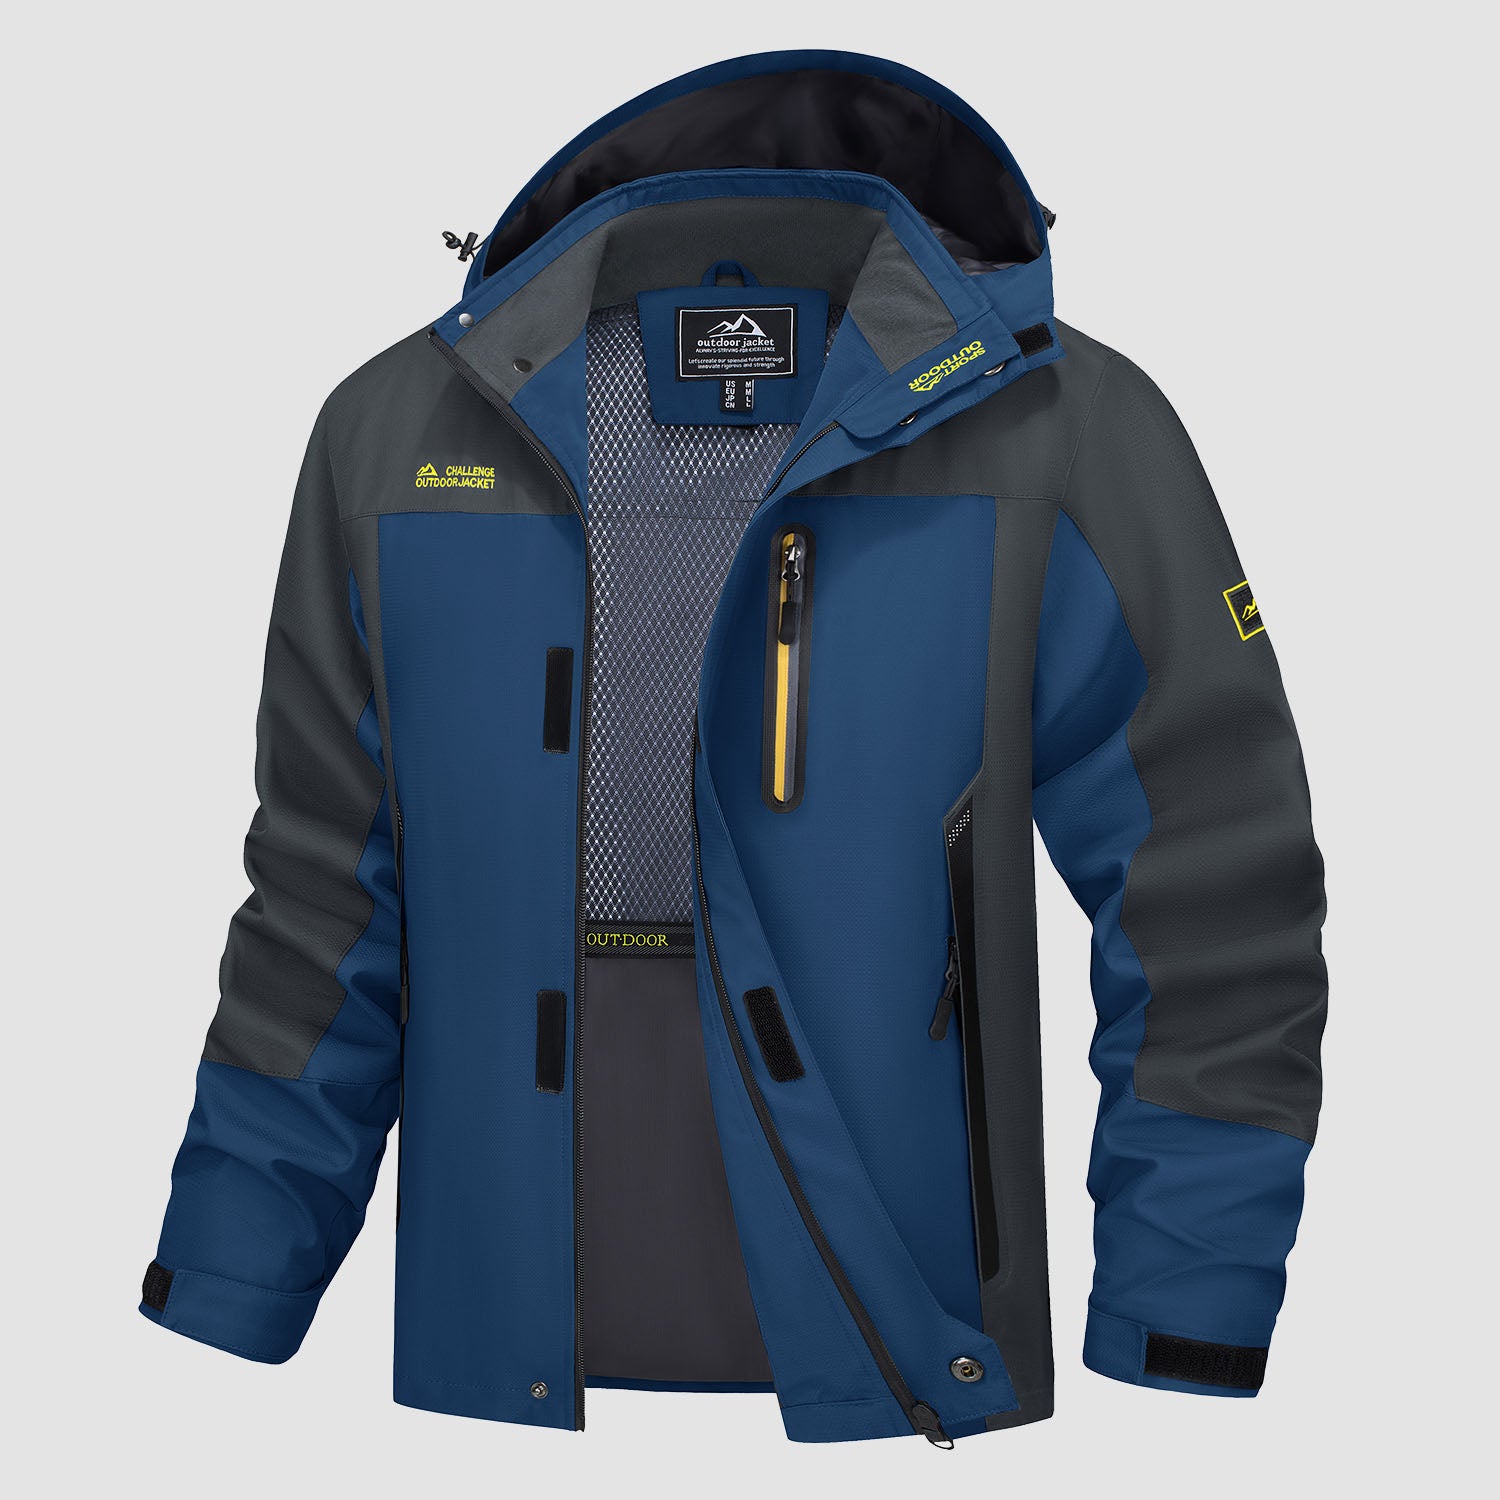 Men's Hooded Jacket Waterproof Windbreaker Coat for Outdoors